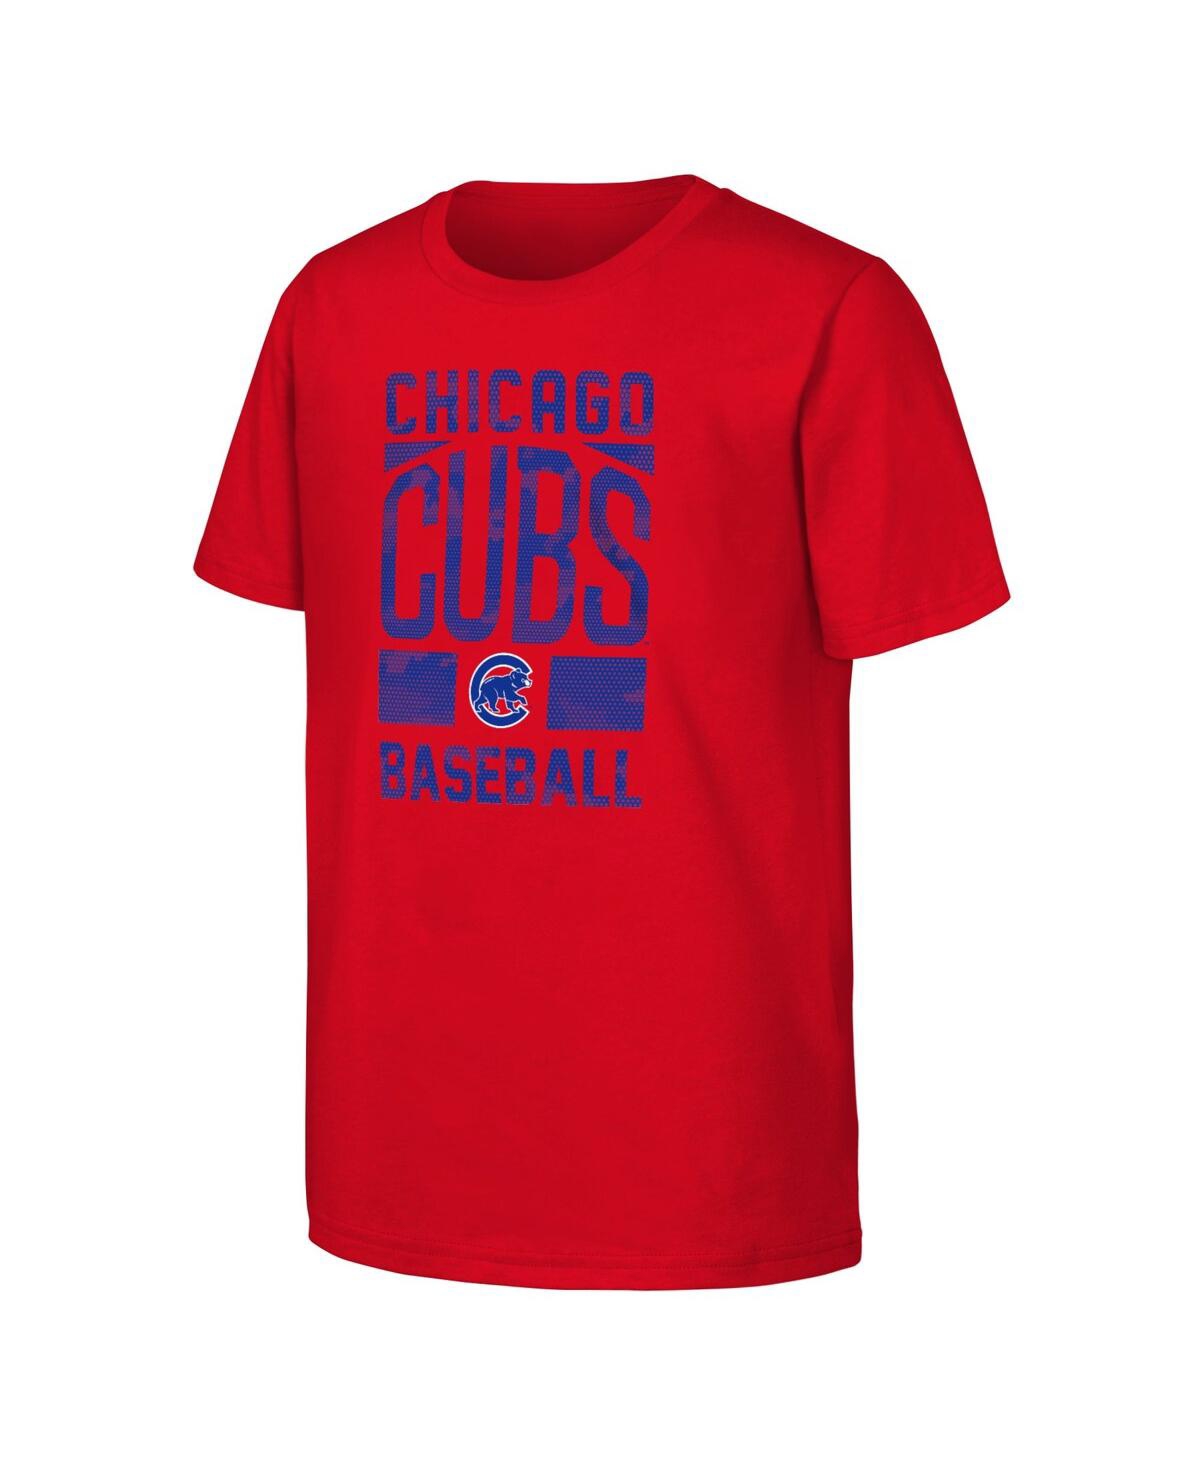 Outerstuff Kids' Big Boys  Red Chicago Cubs Season Ticket T-shirt